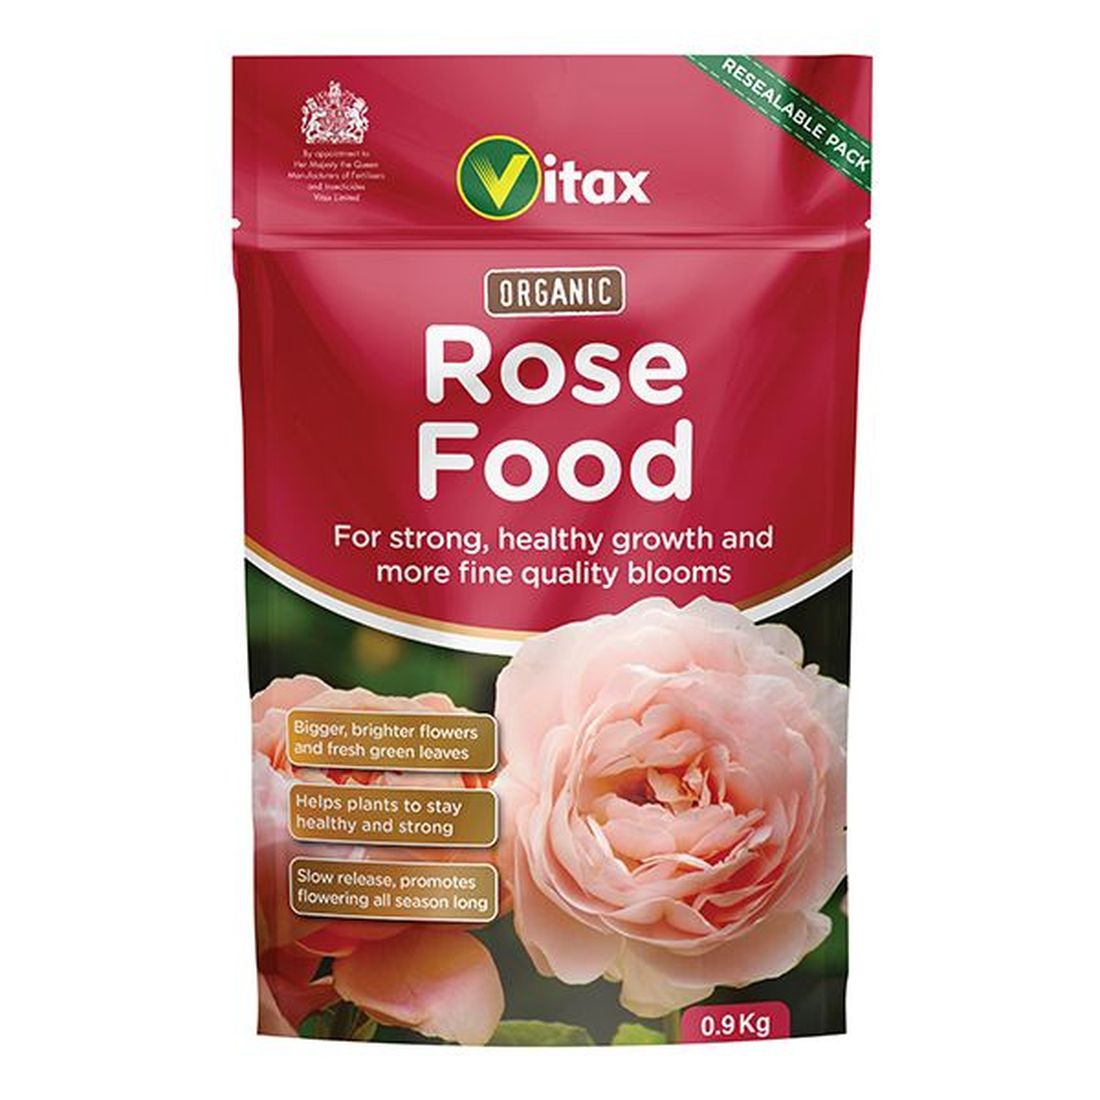 Vitax Organic Rose Food 0.9kg Pouch     